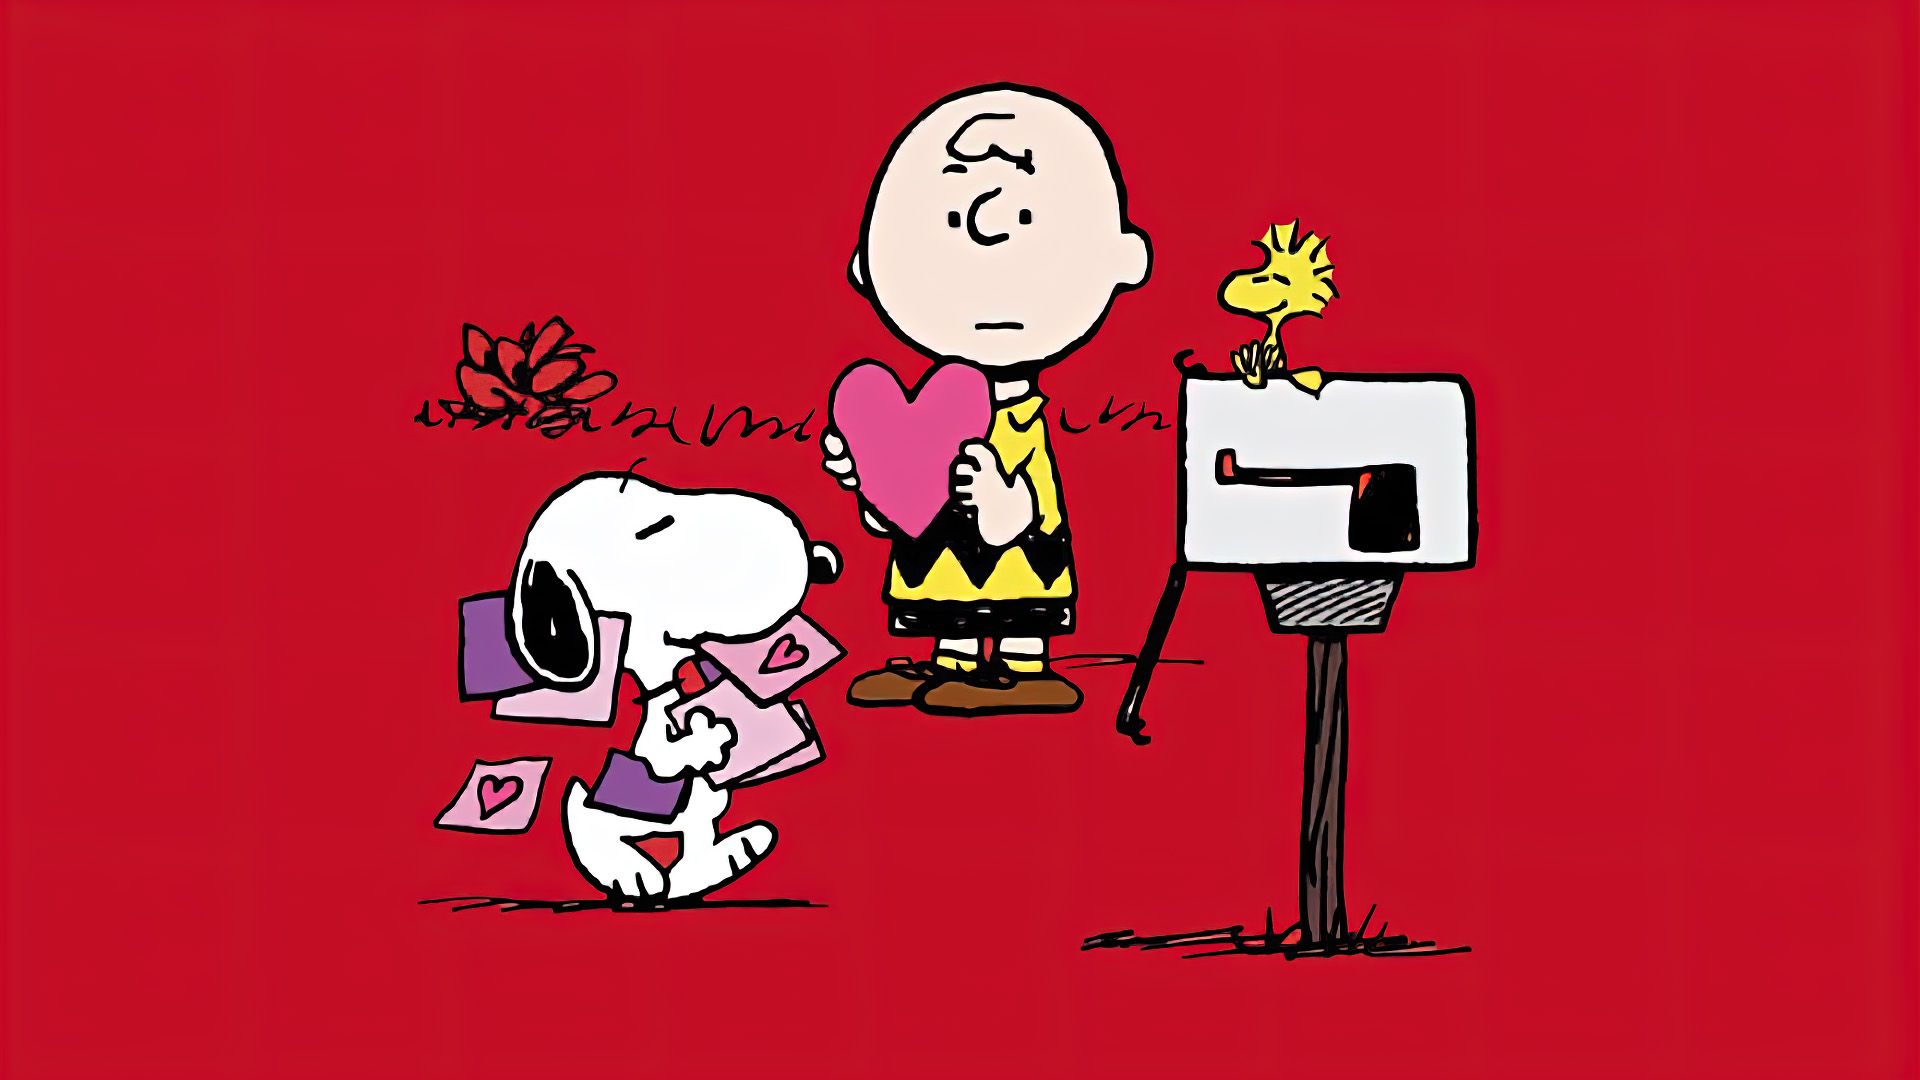 Be My Valentine, Charlie Brown background